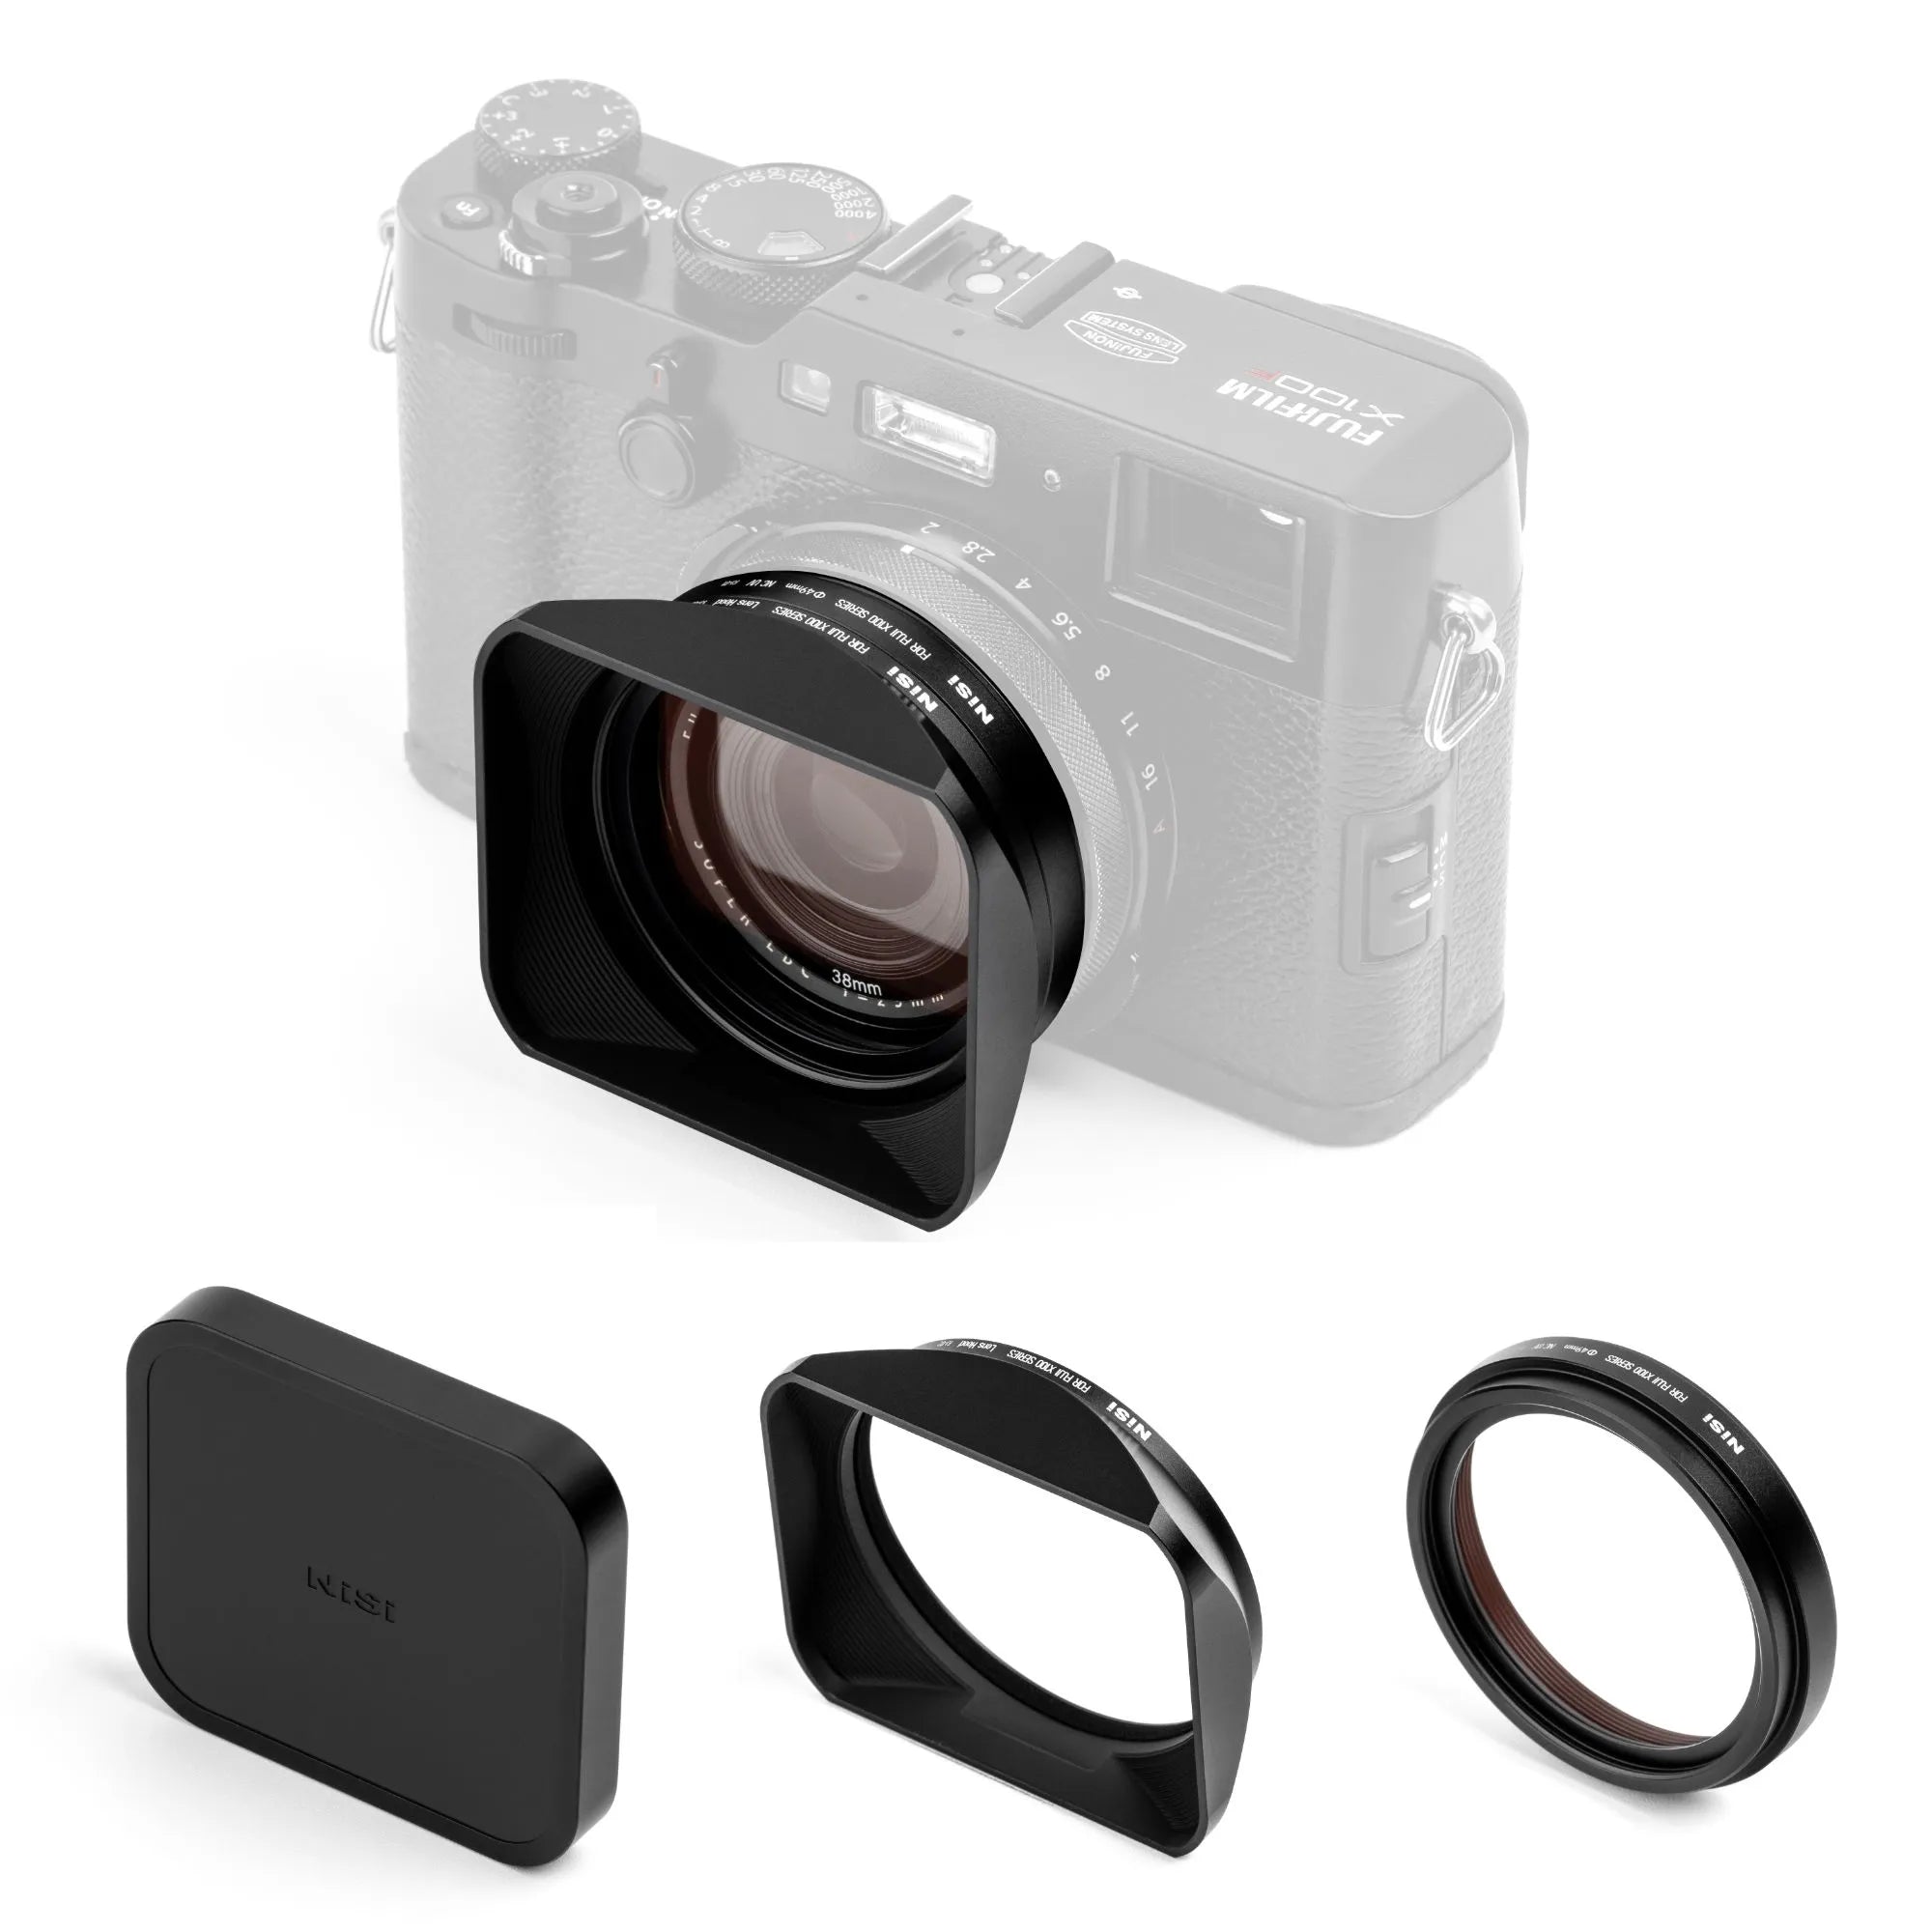 NiSi NC UV Filter with 49mm Filter Adaptor, Metal Lens Hood and Lens Cap